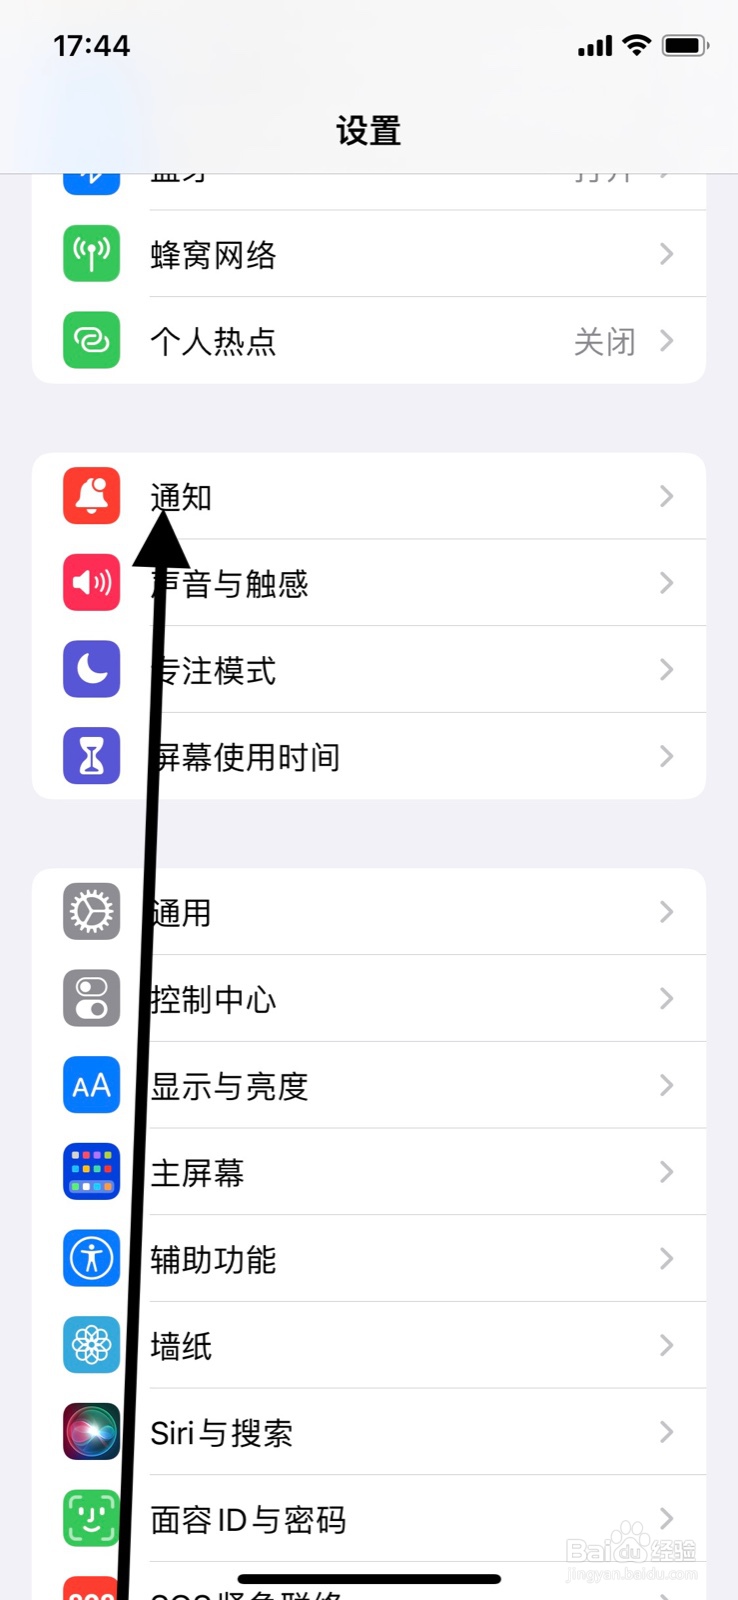 <b>iPhone通知中心关闭“欢乐斗地主”app显示通知</b>